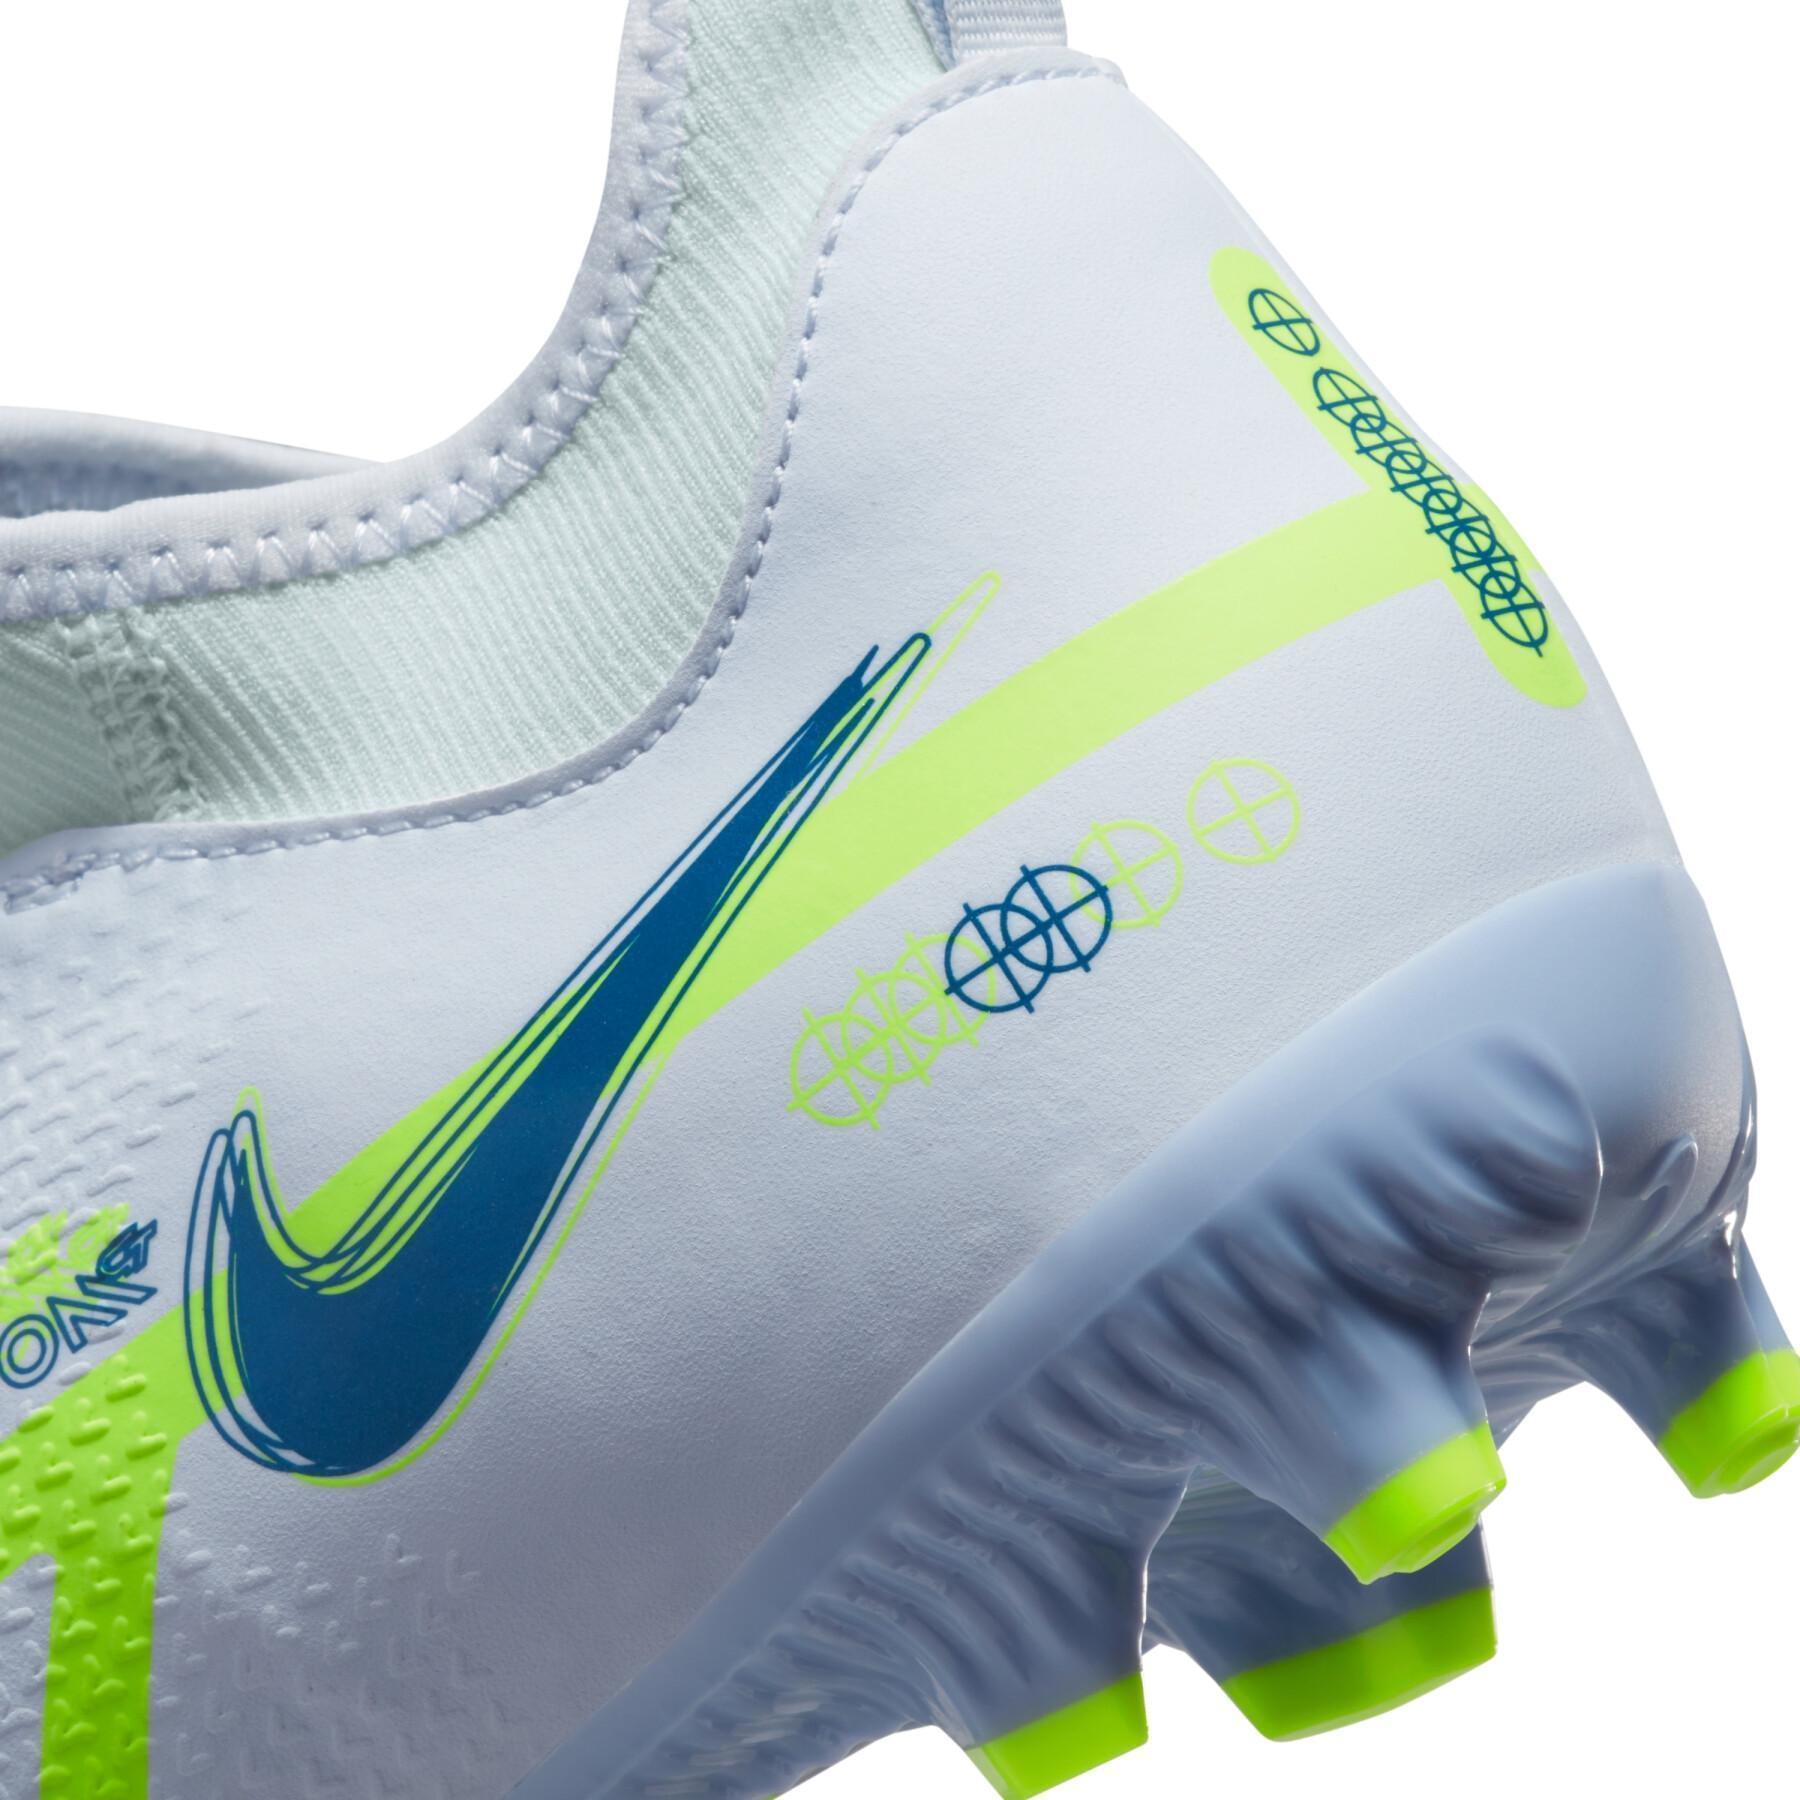 Children's soccer shoes Nike Phantom Gt2 Academy Dynamic Fit - Progress Pack